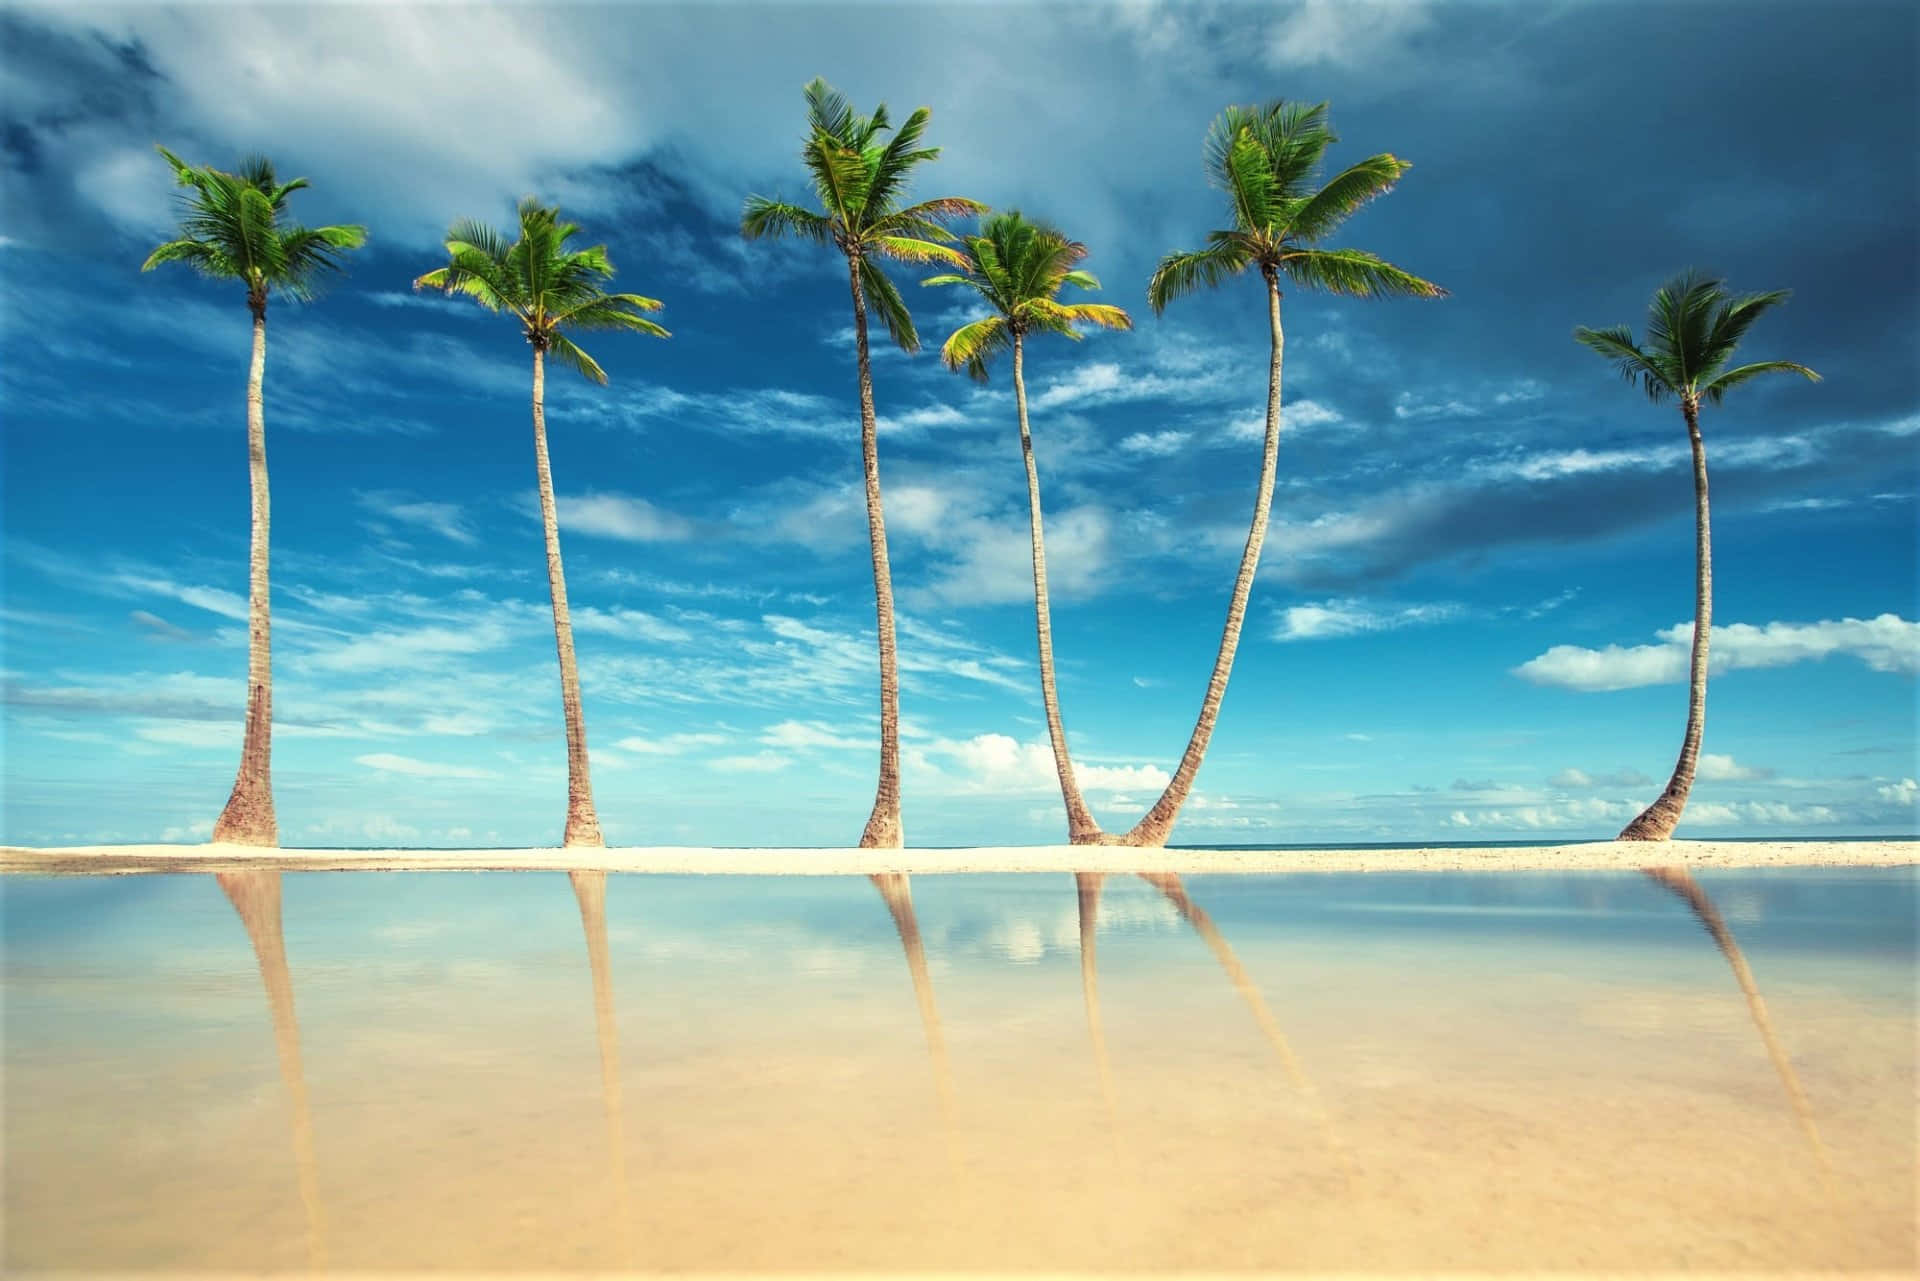 Enjoy the Photos of Beautiful Palm Trees in Sunny Beach